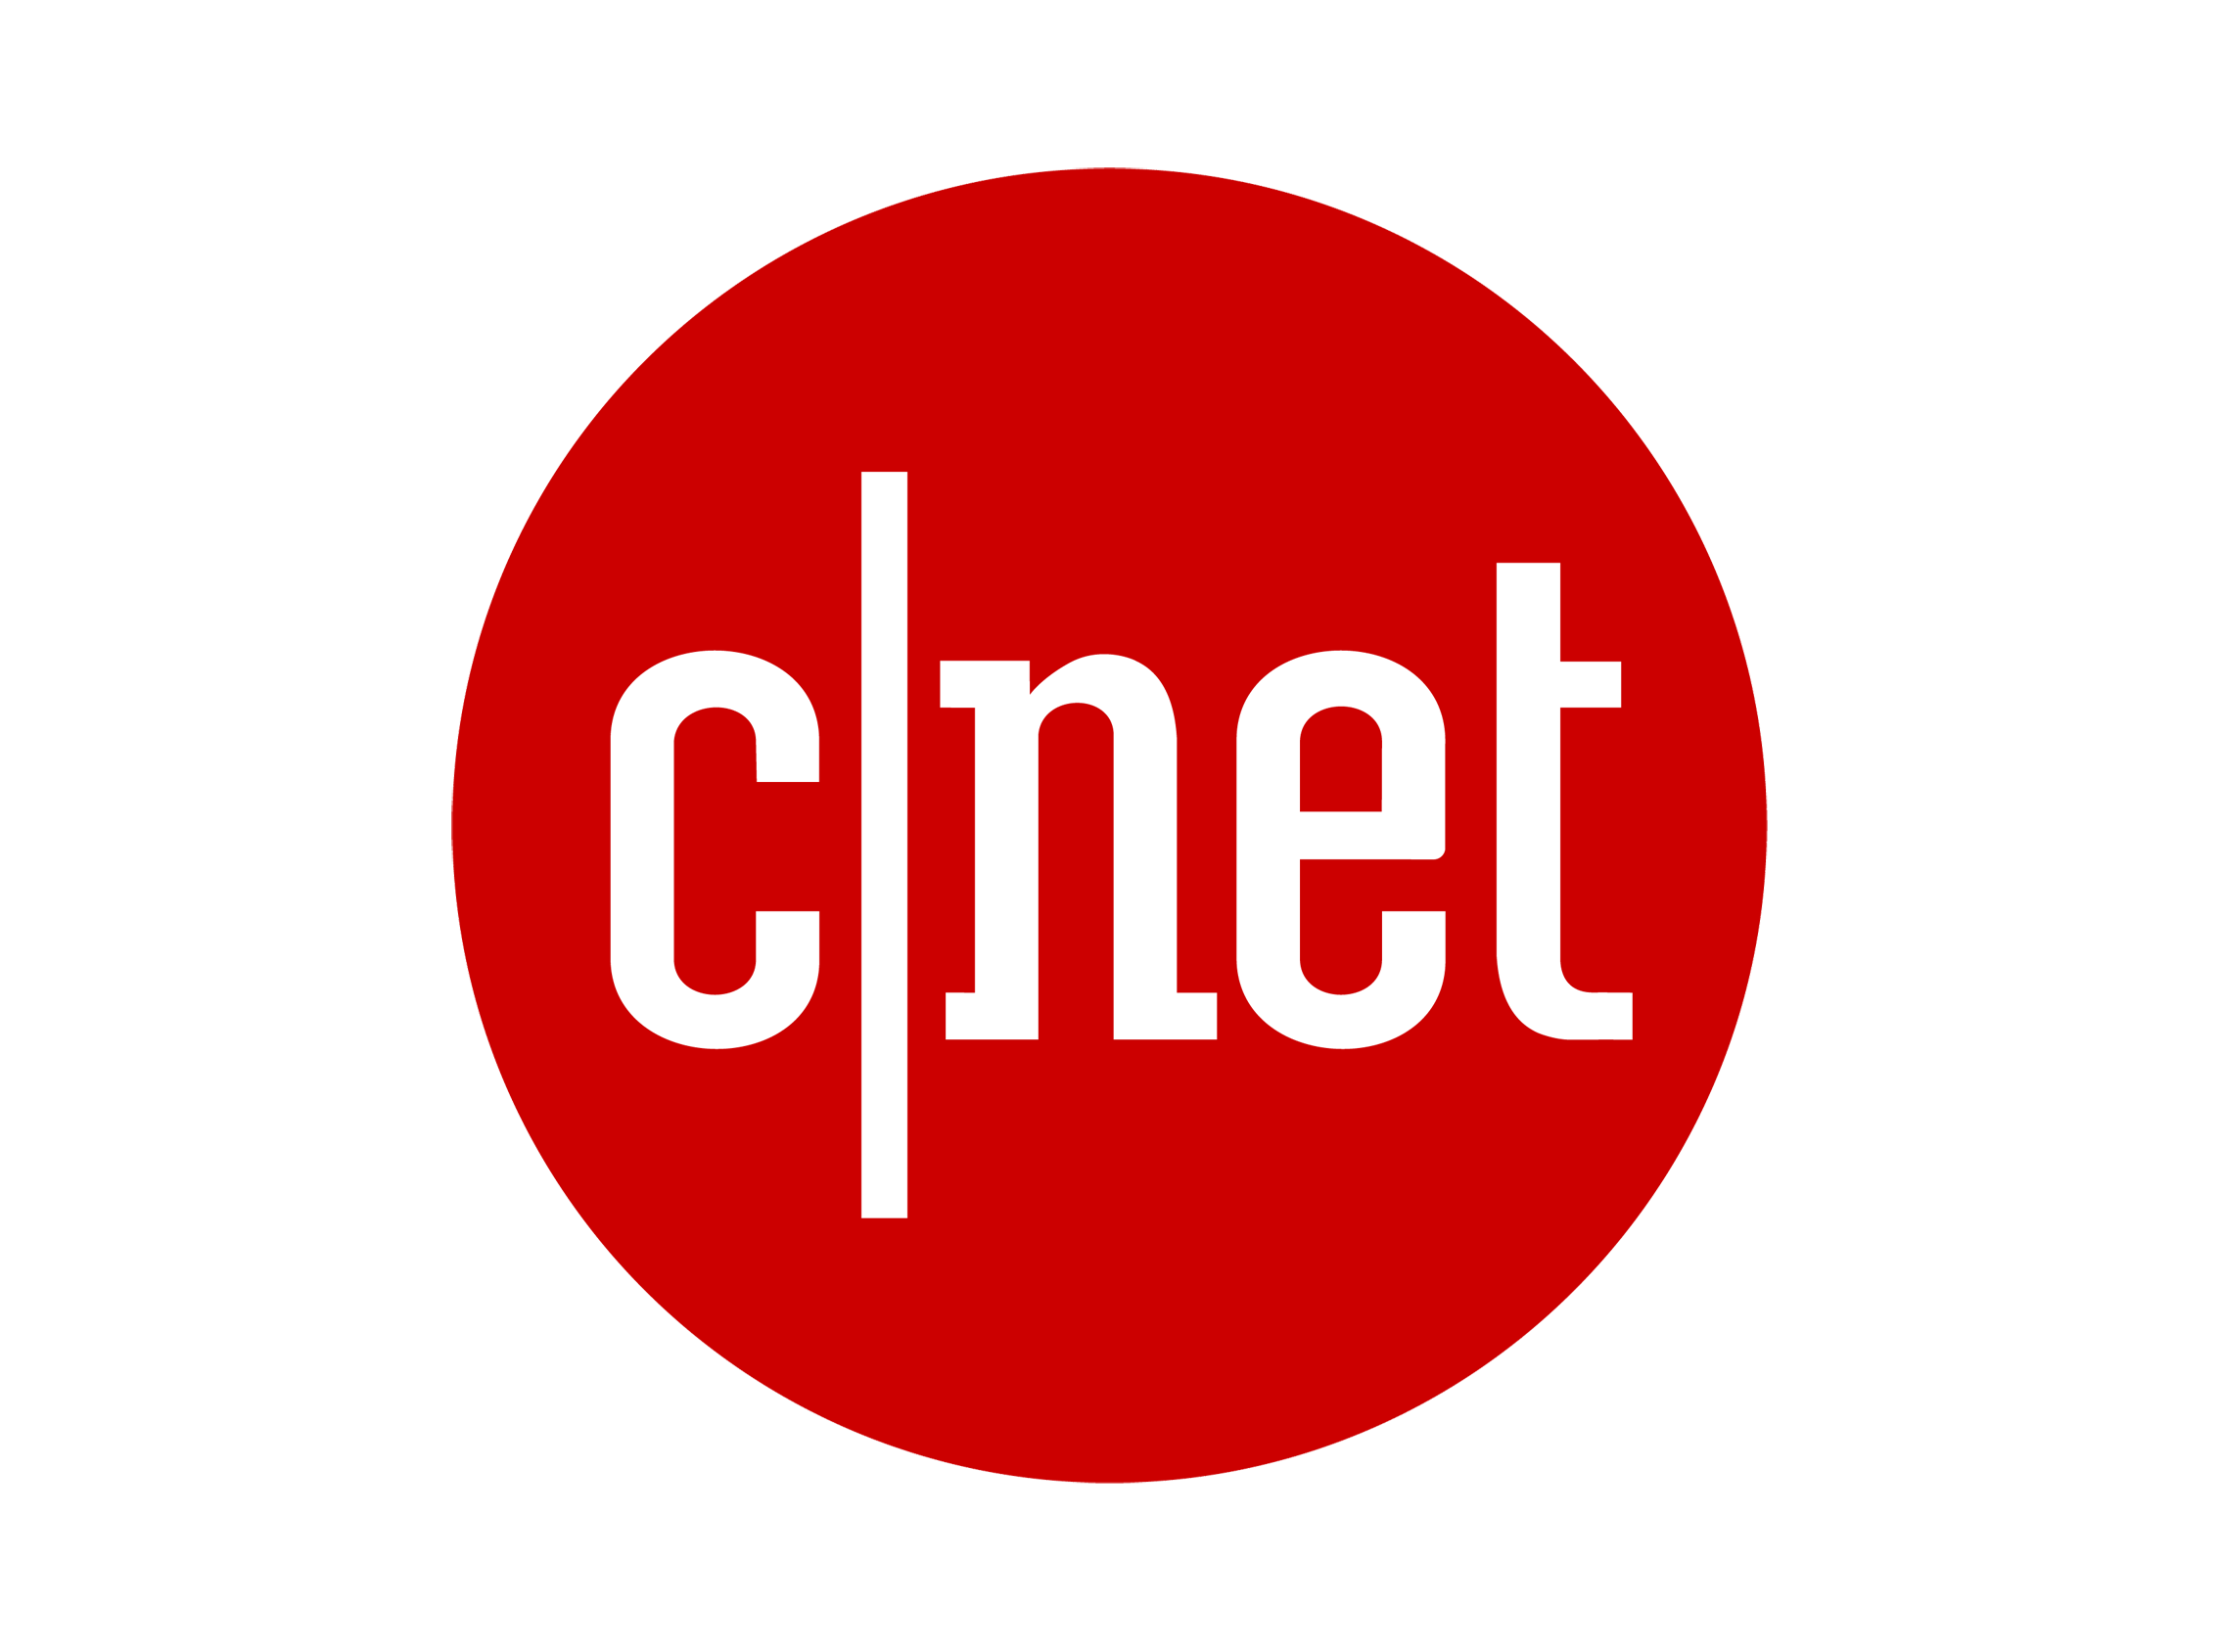 Crave/CNET logo